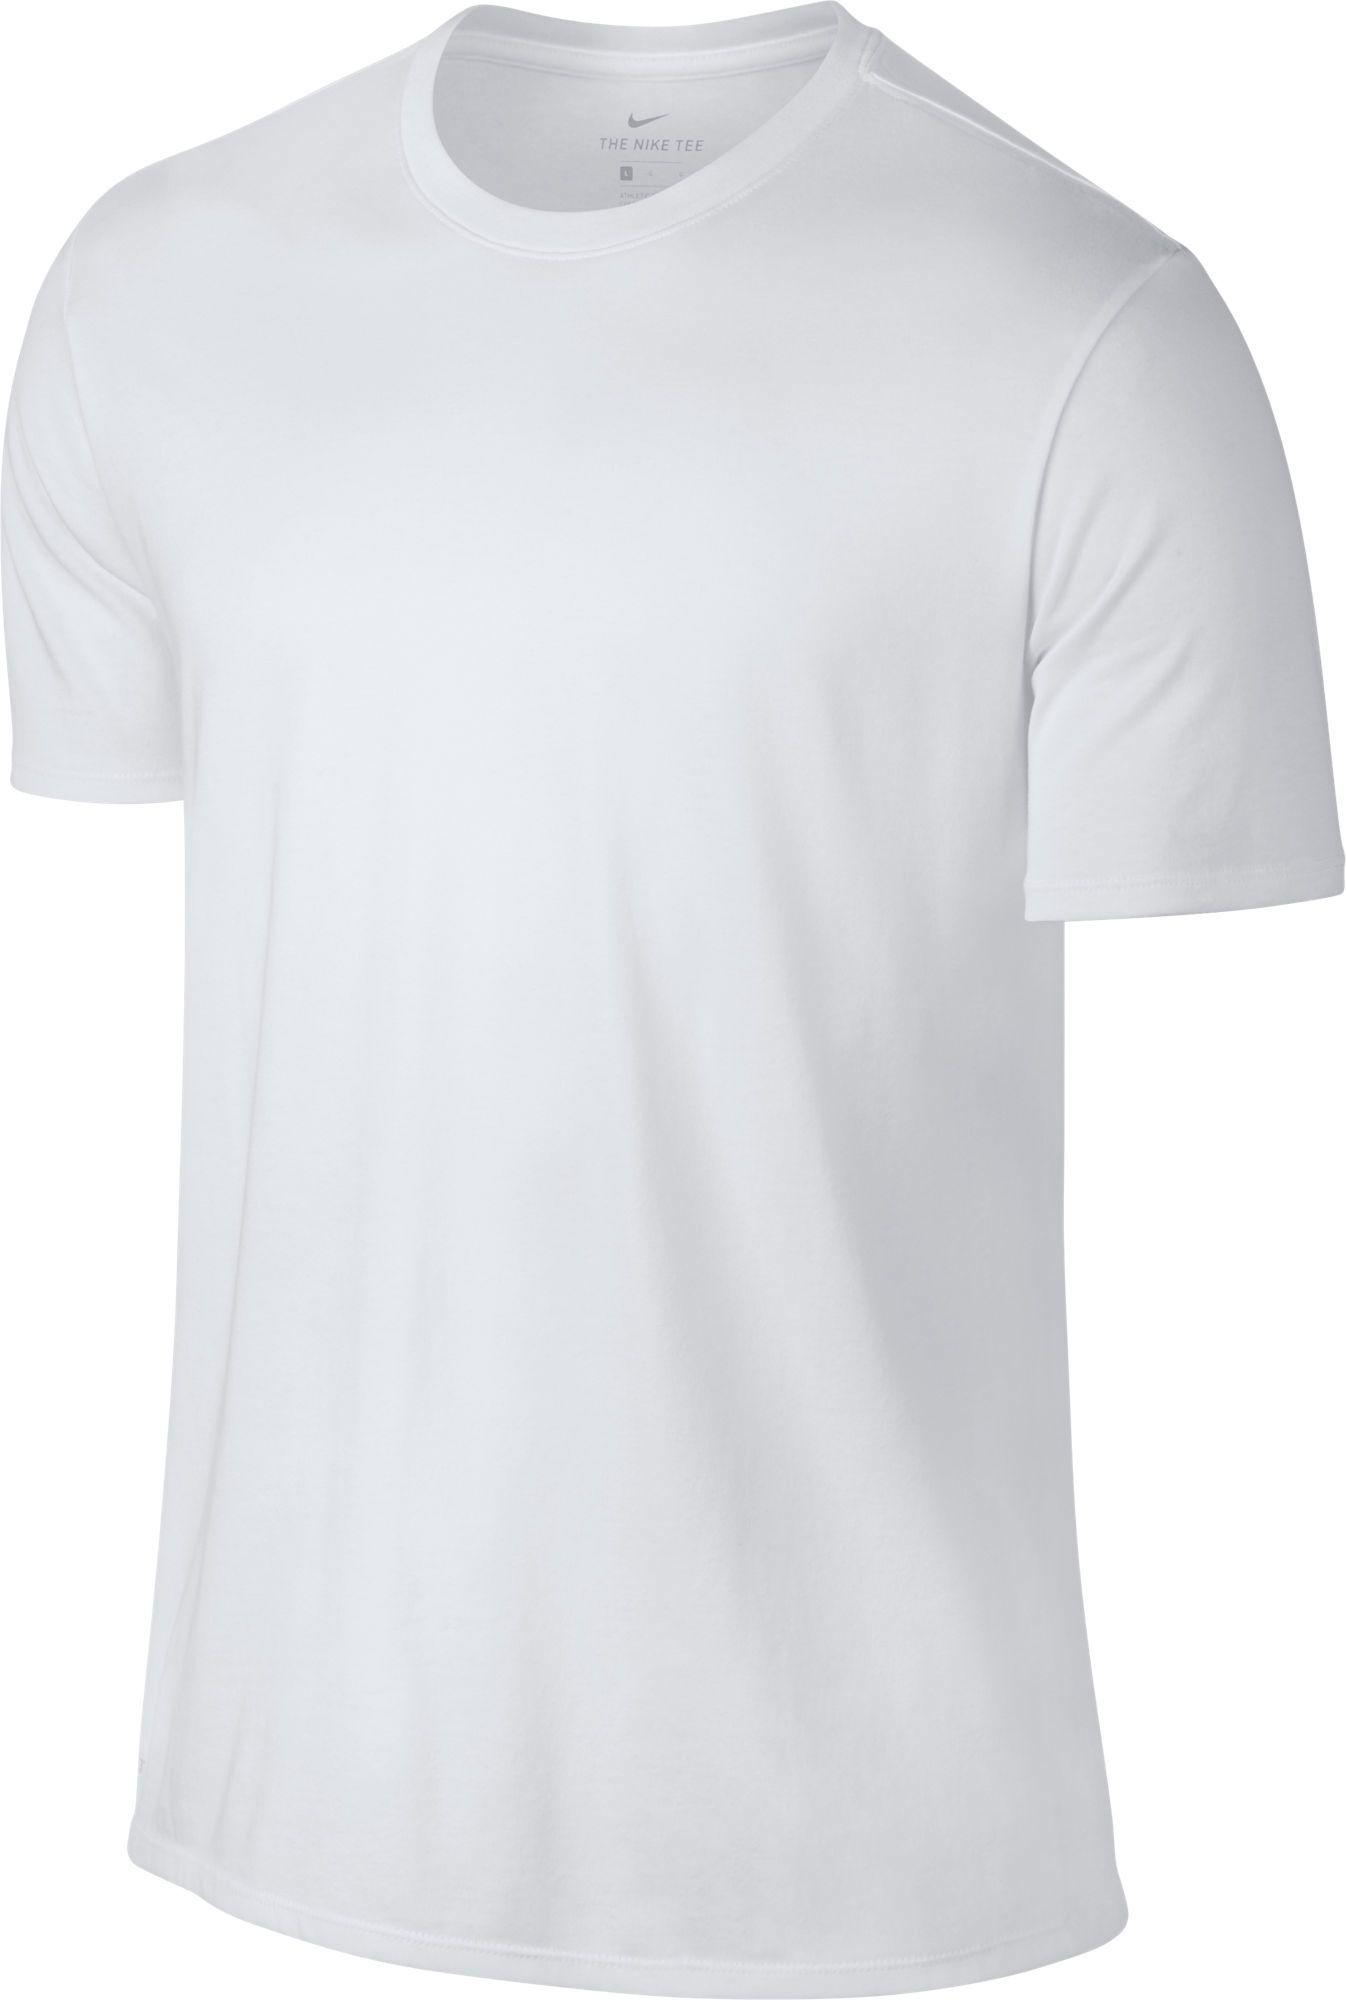 plain white nike t shirt